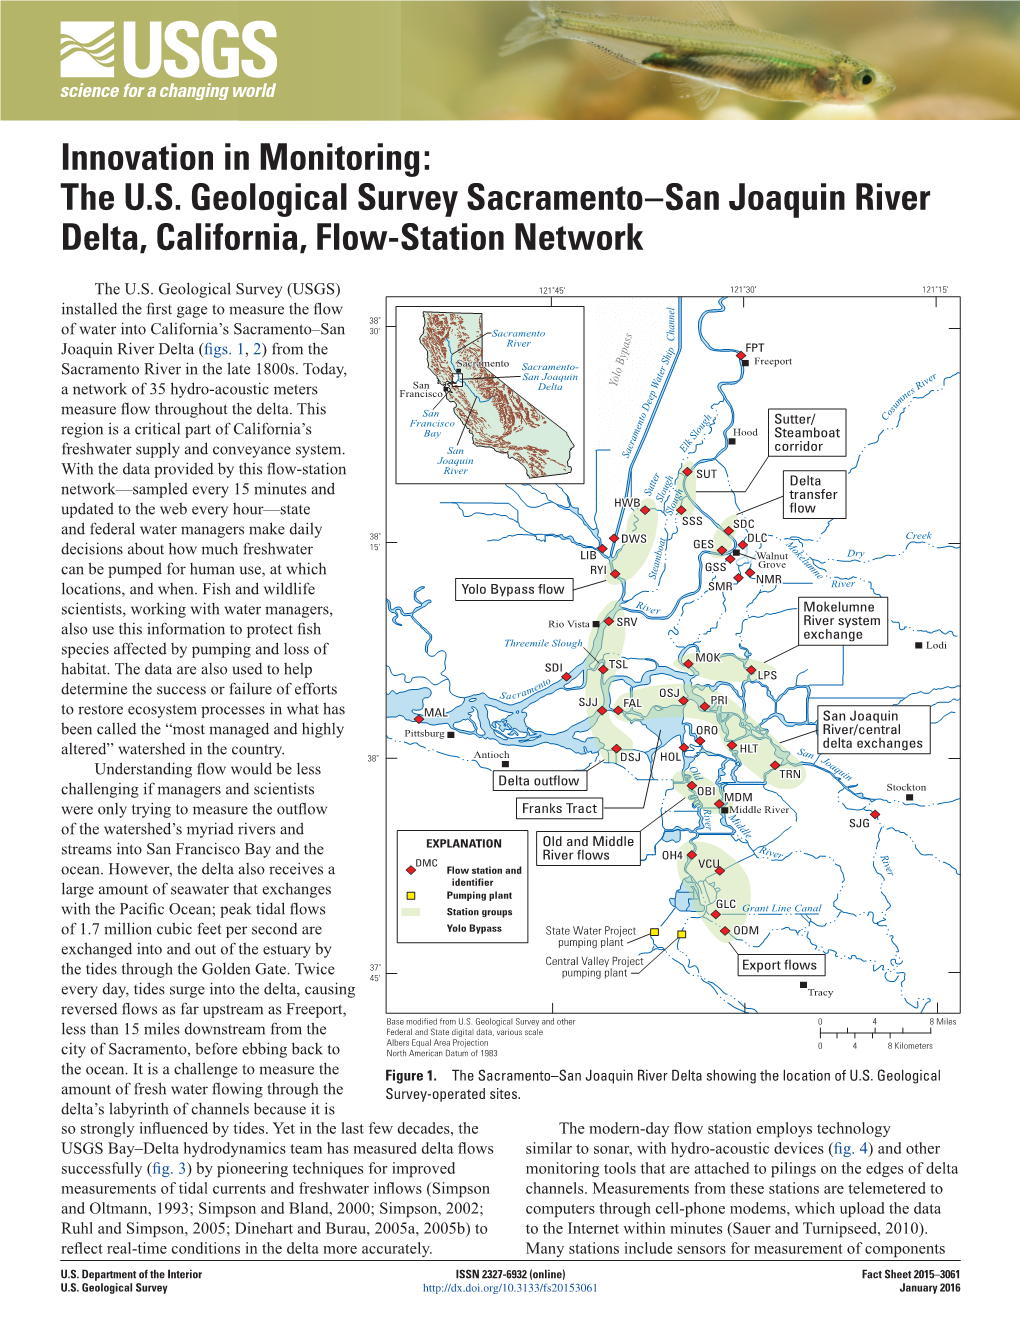 San Joaquin River Delta, California, Flow-Station Network